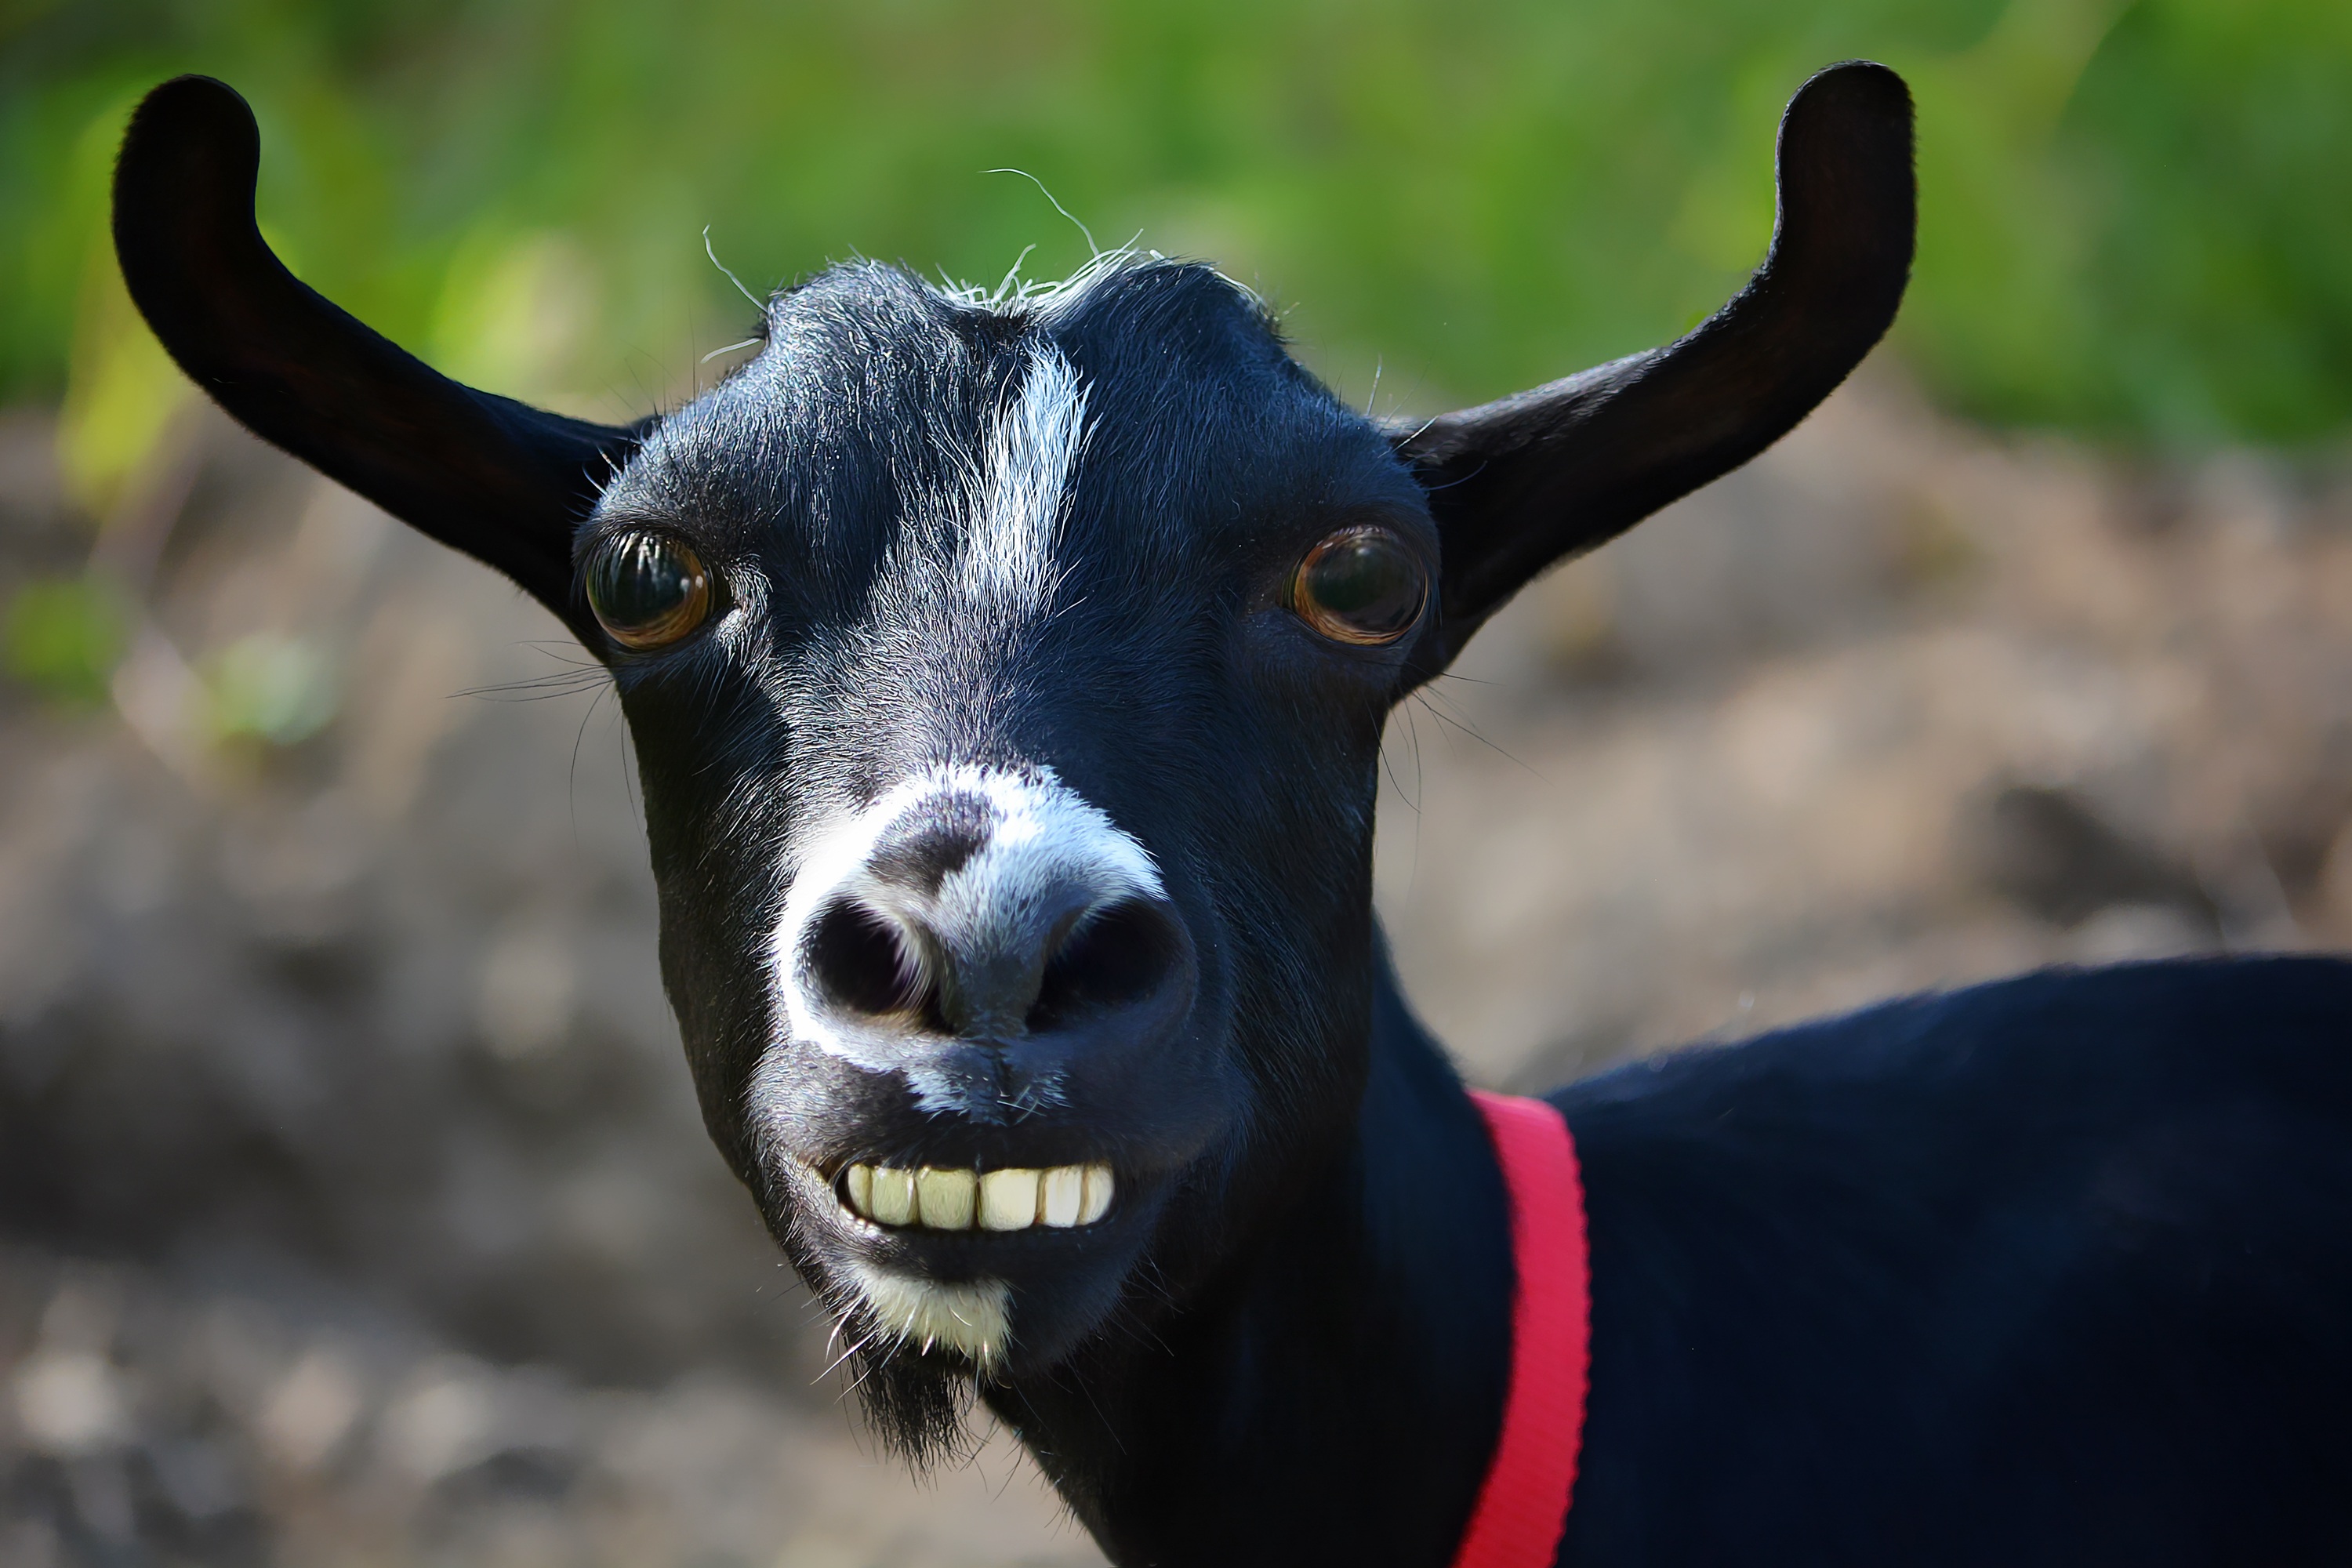 Funny Black Goat, head portrait free image download